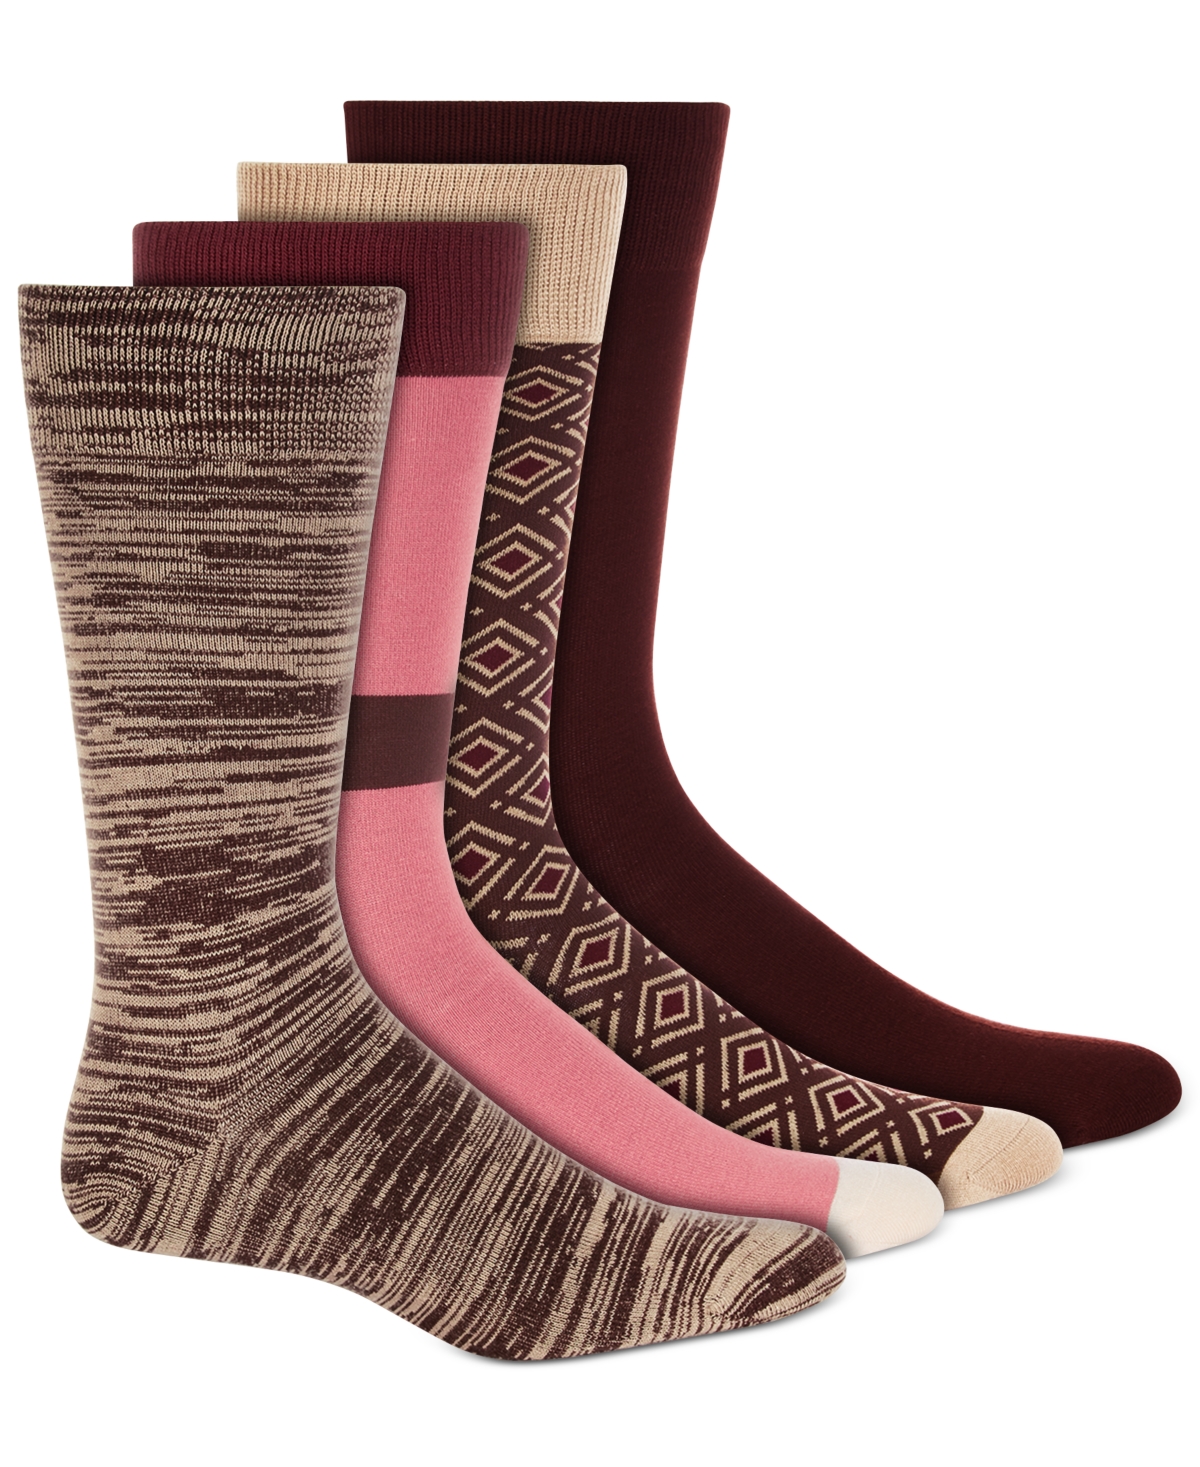 Alfani Men's Burgundy Printed Crew Socks - 4 pk., Created for Macy's